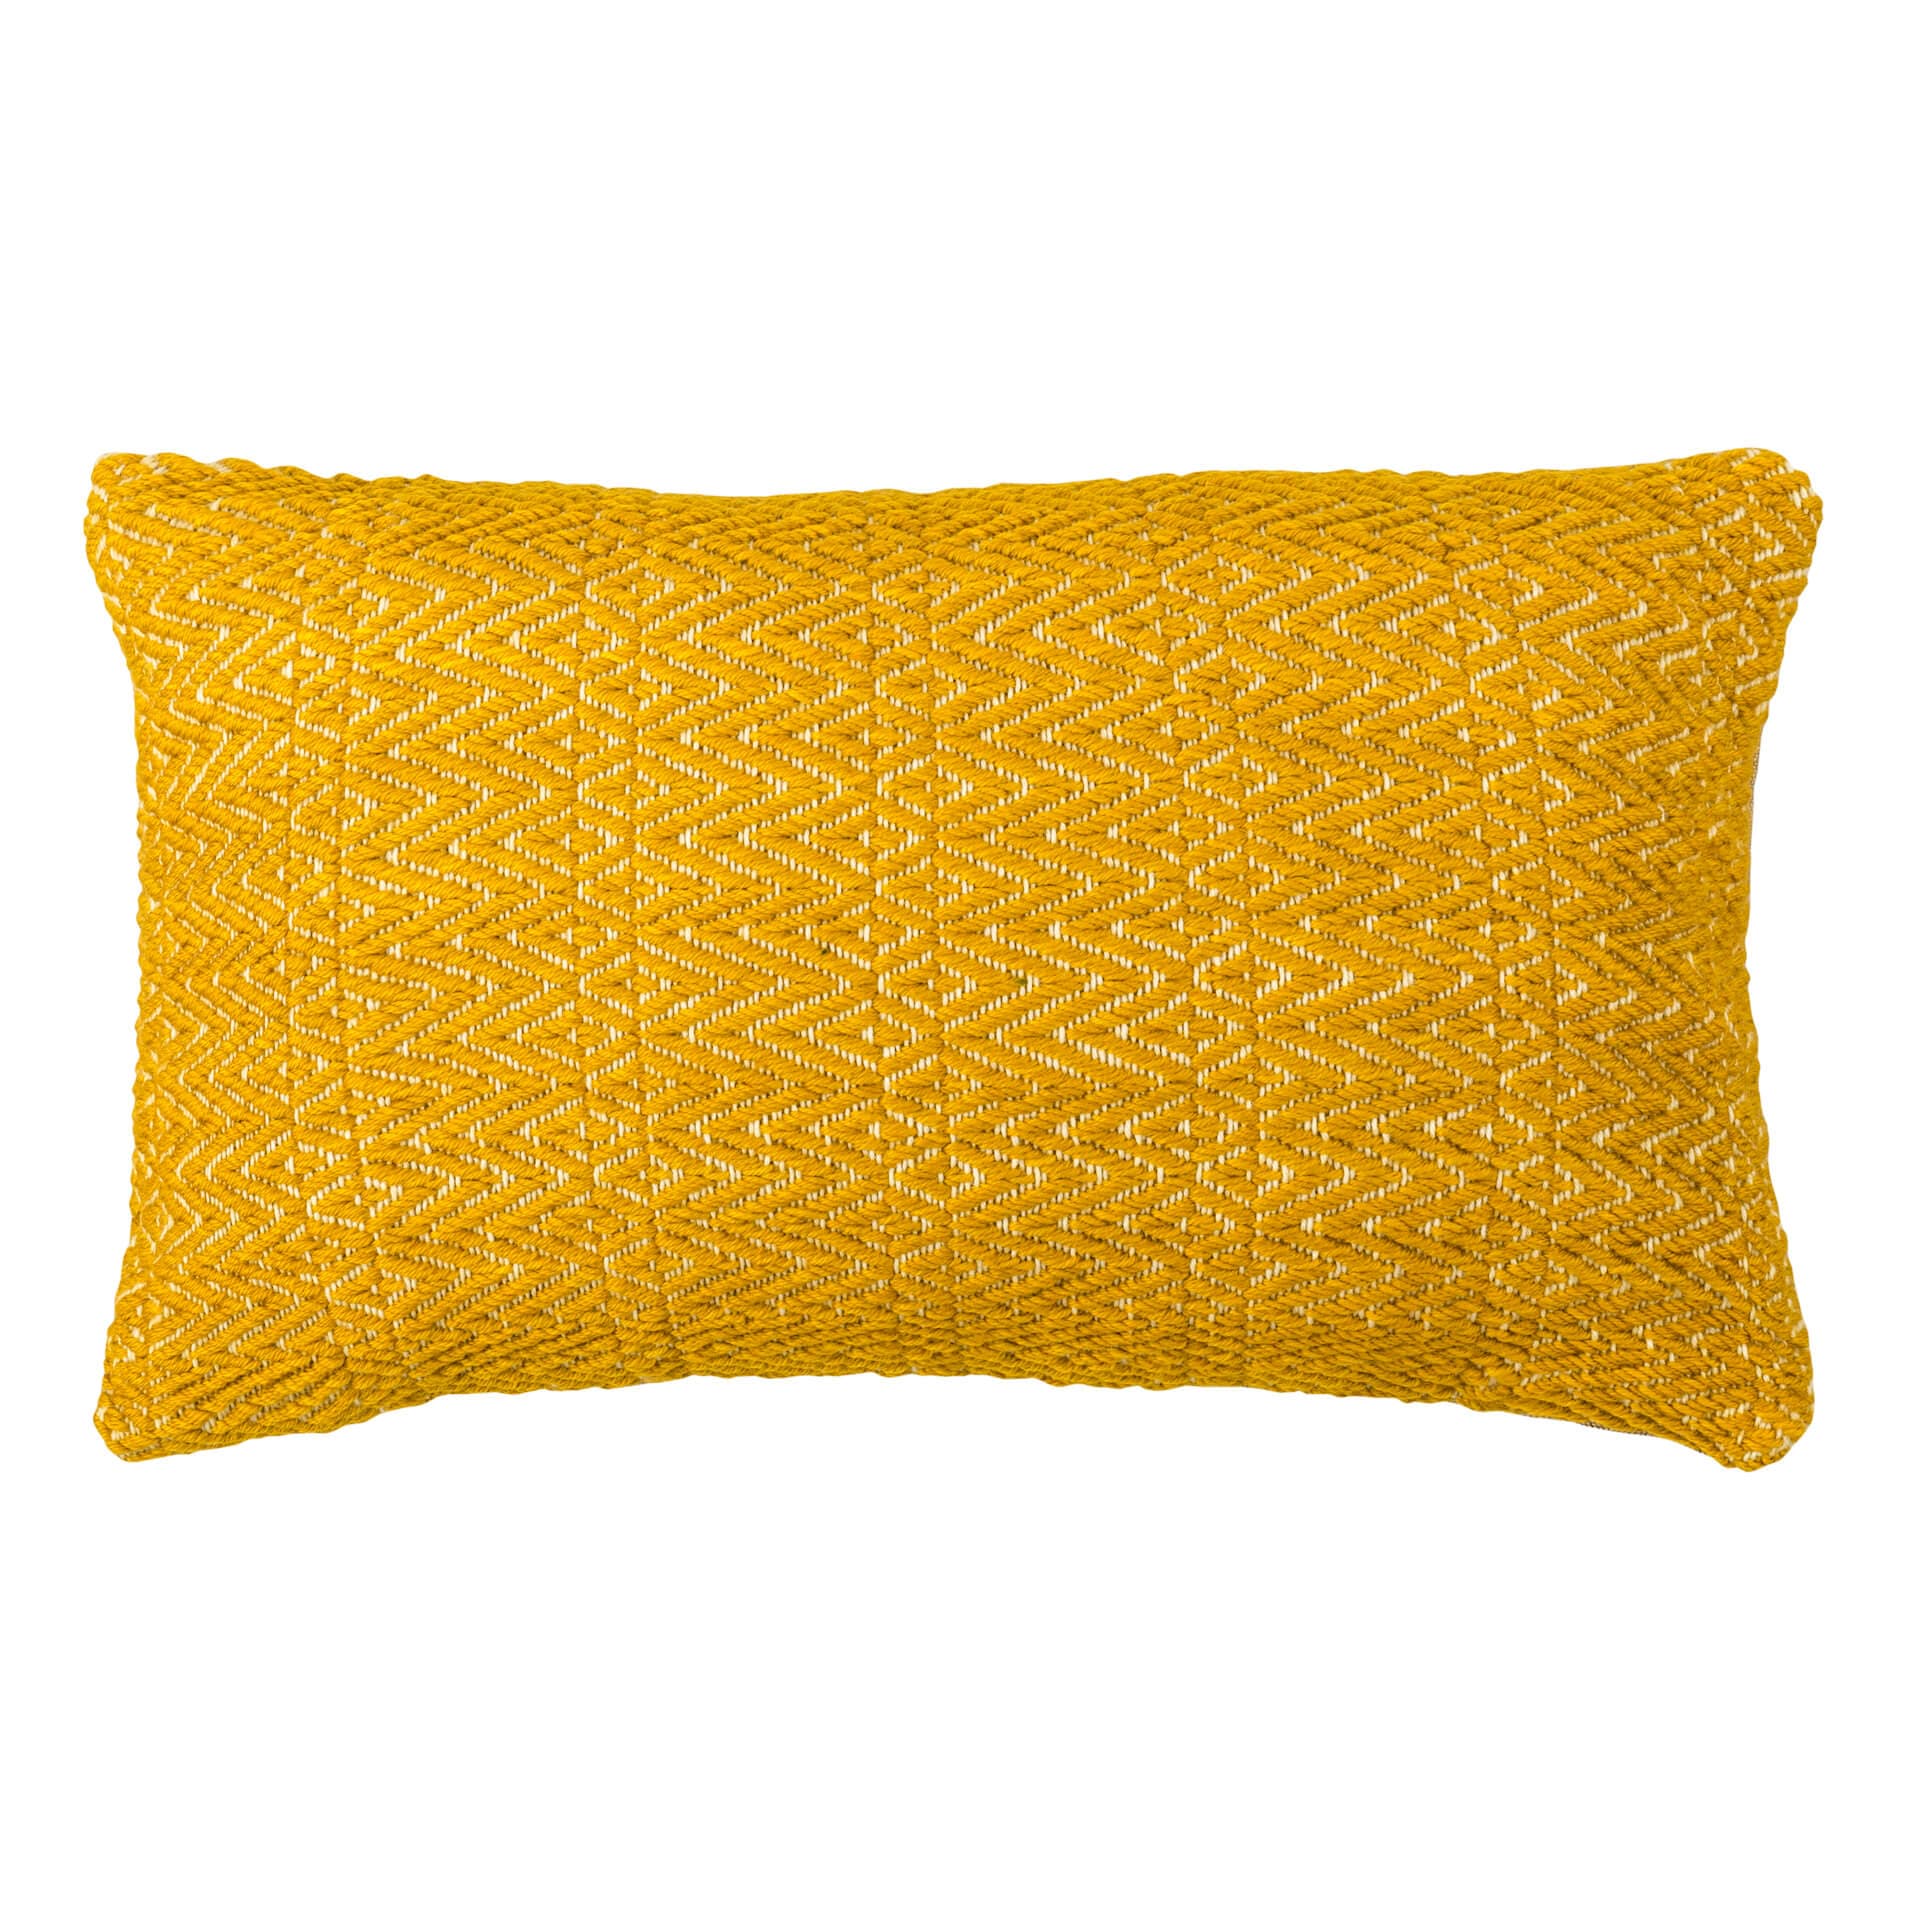 Honest Weaves Cushion Hand woven cushion - Turmeric